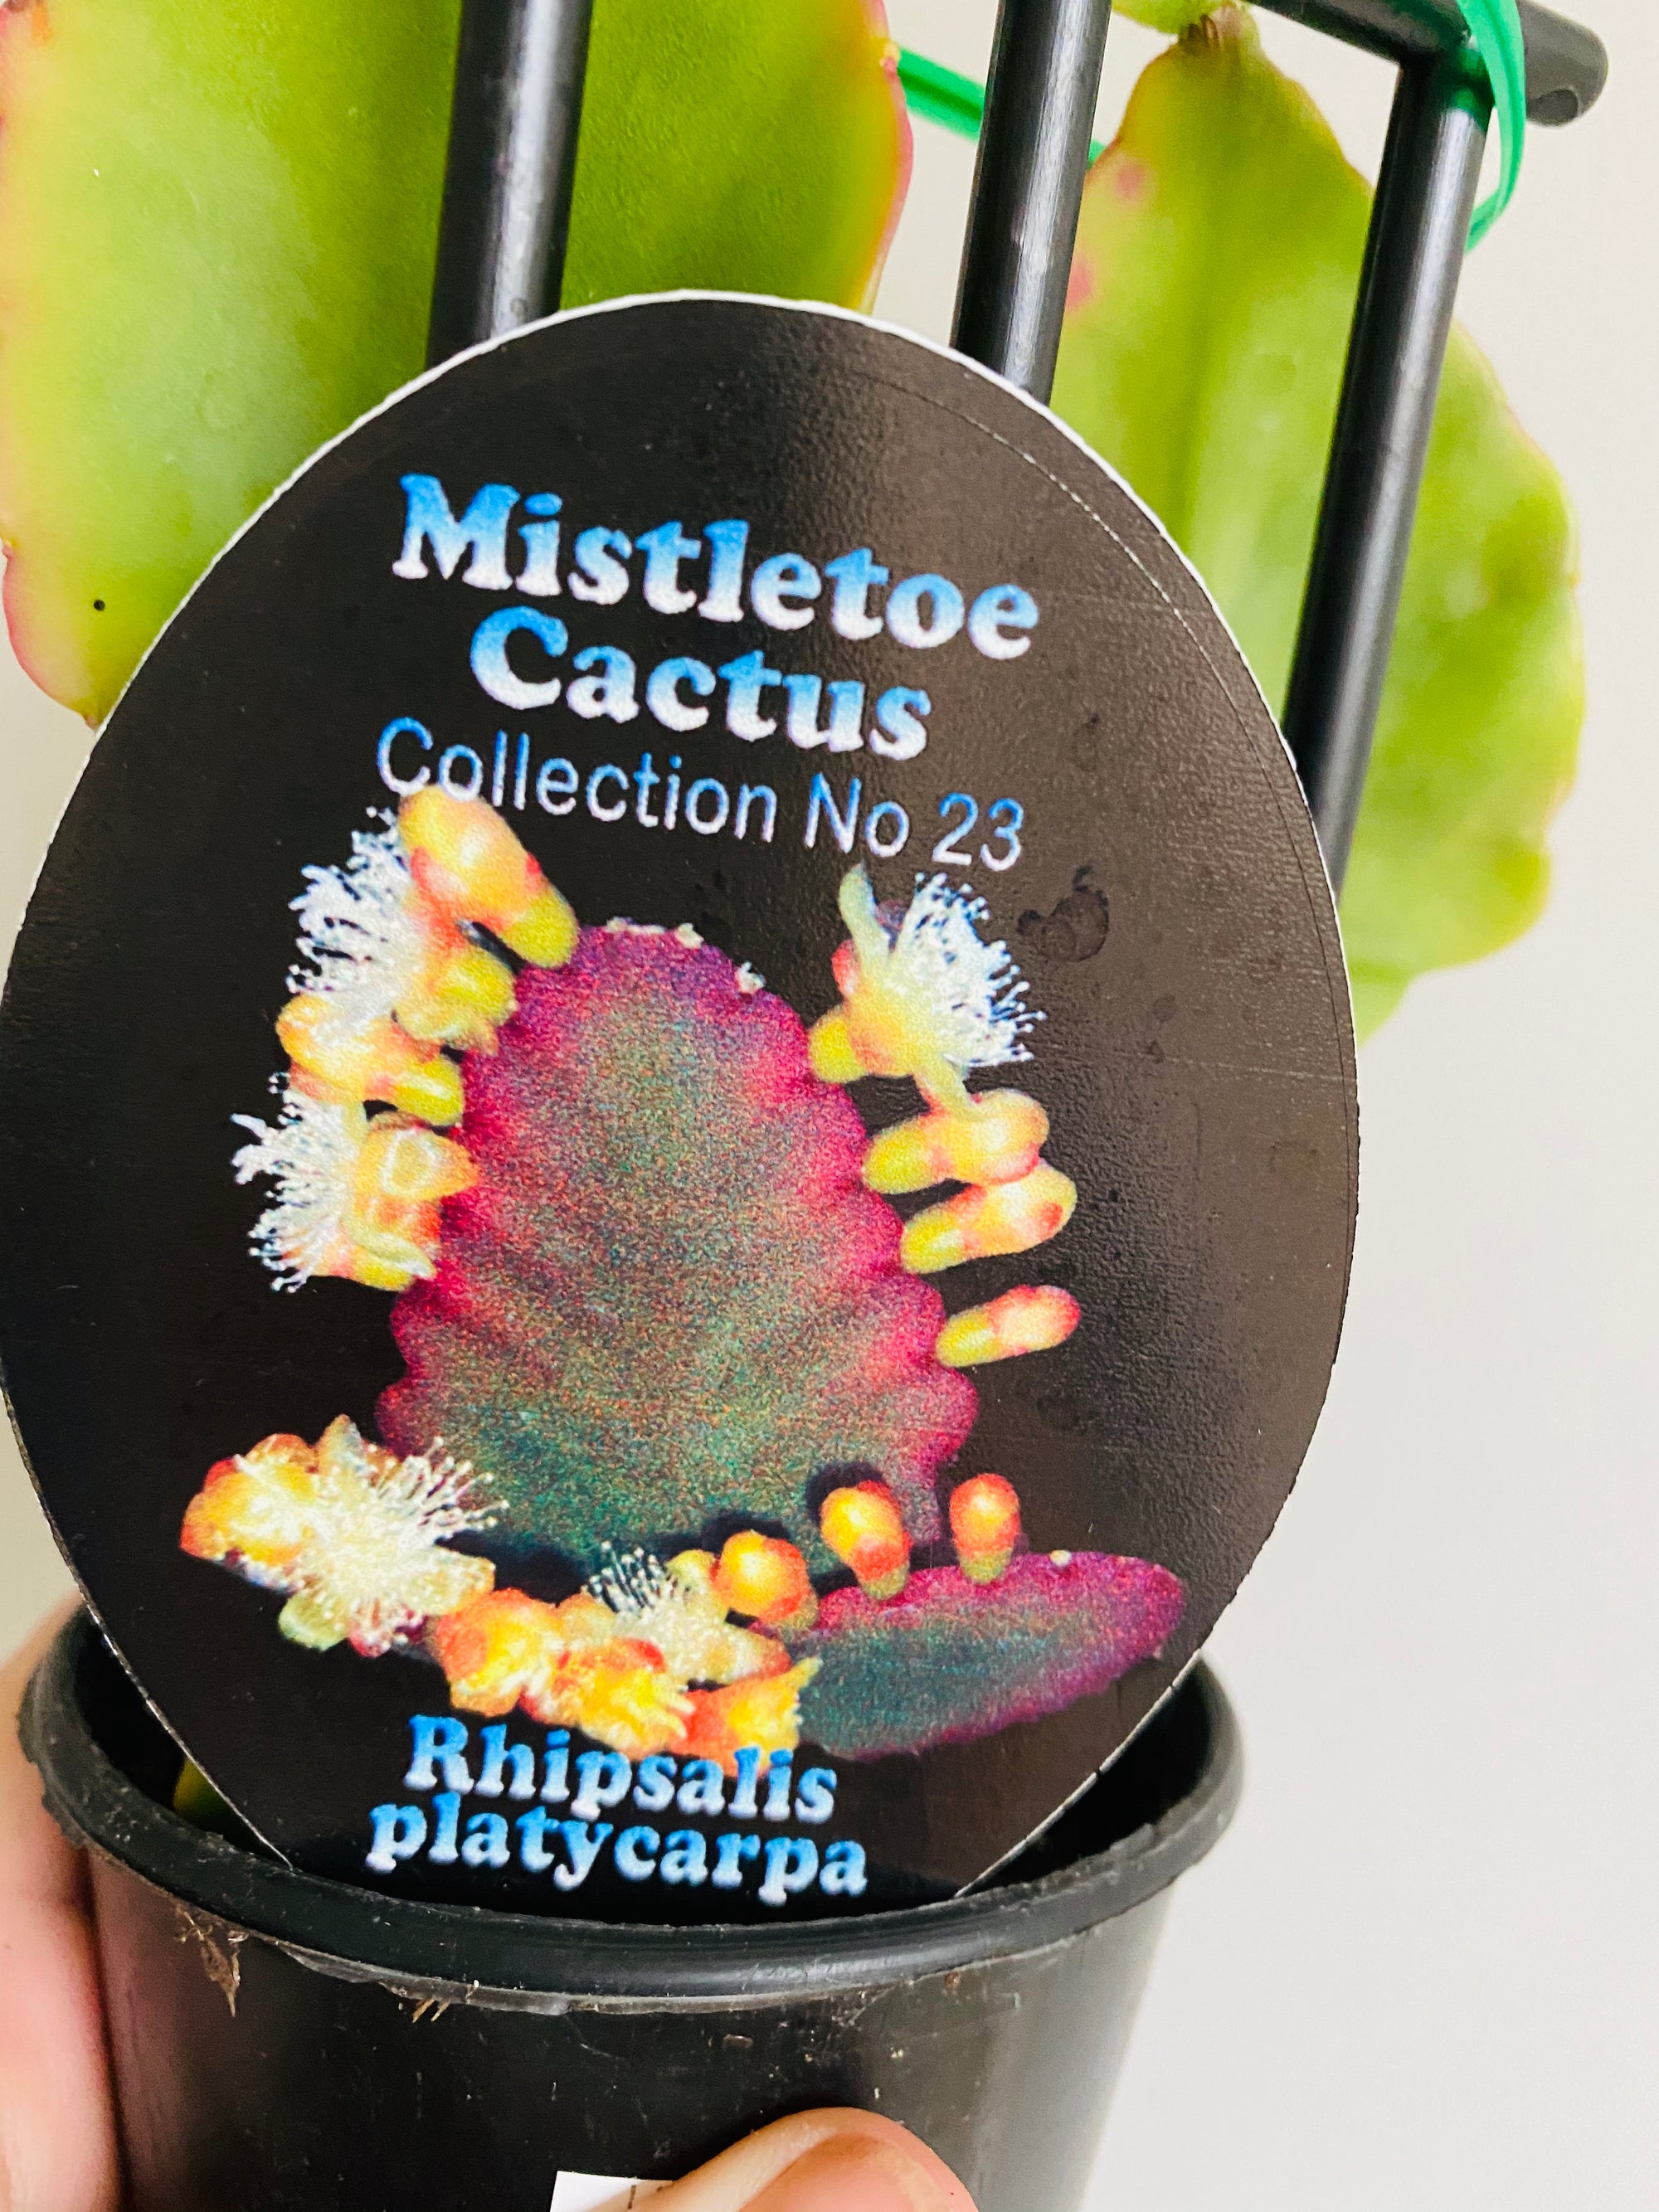 Rhipsalis Platycarpa - Mistletoe Cactus Collection No. 23